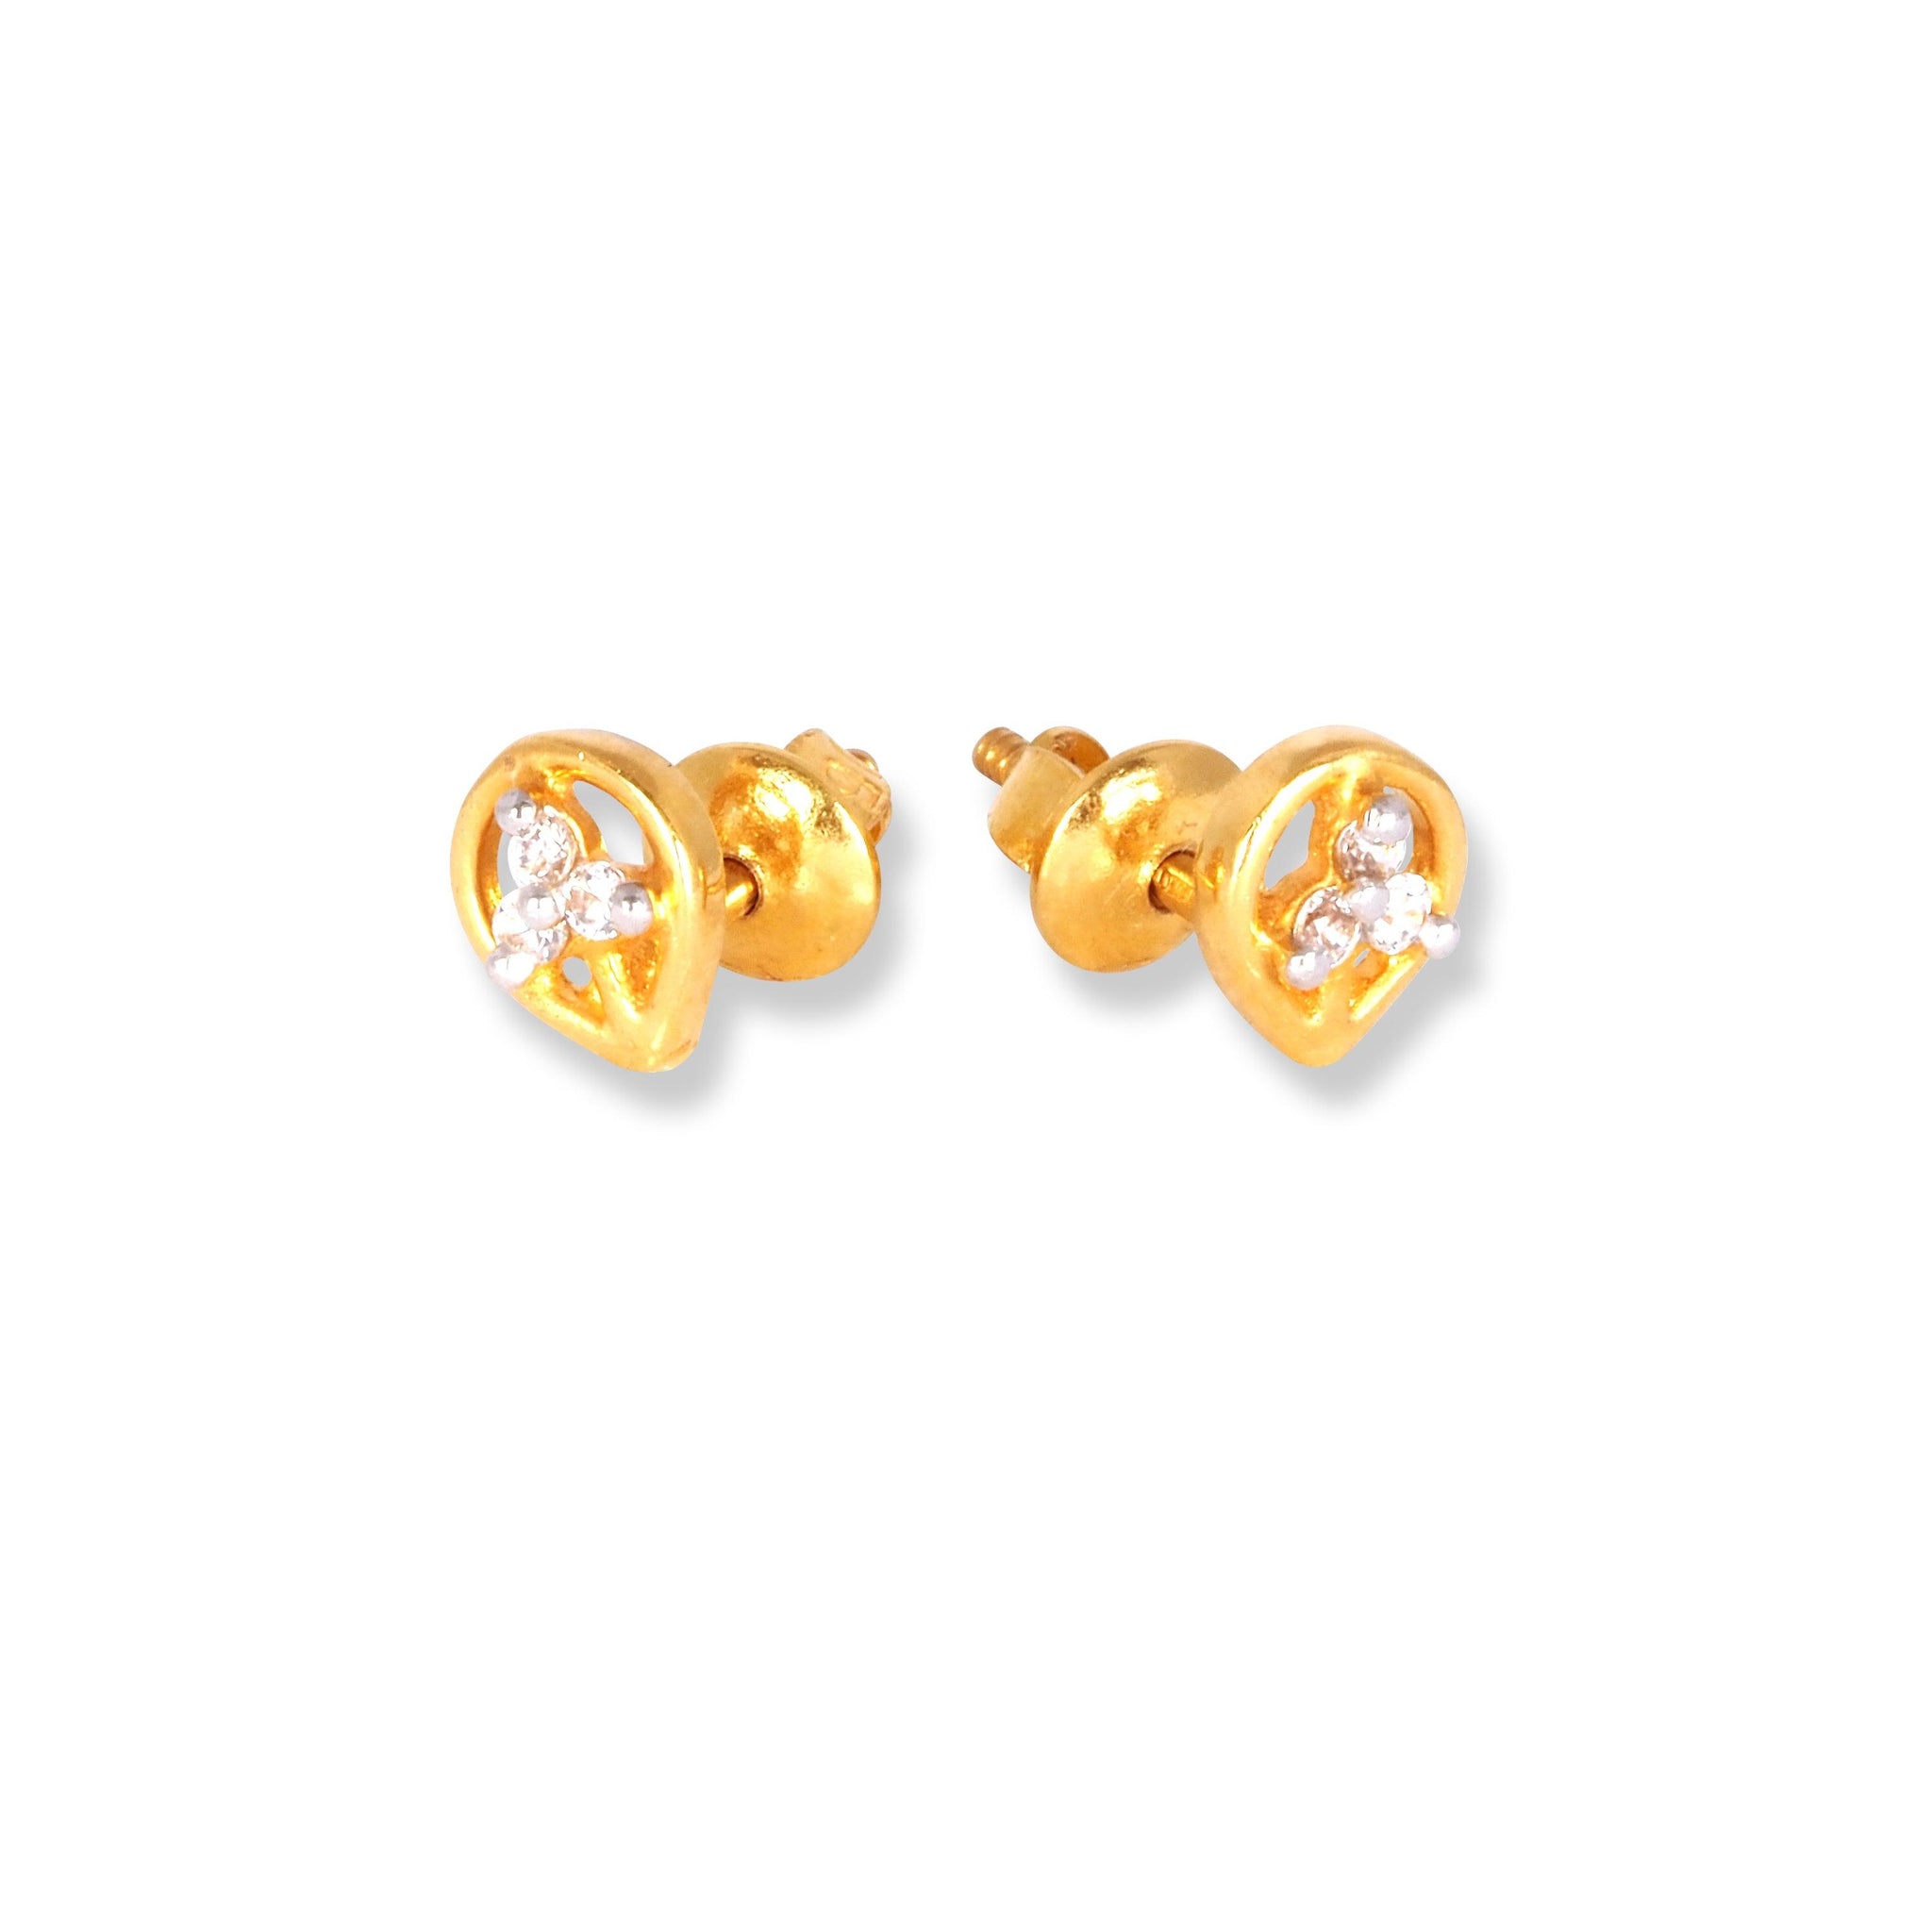 22ct Gold Set with Swarovski Zirconia Stones (Pendant + Chain + Stud Earrings)